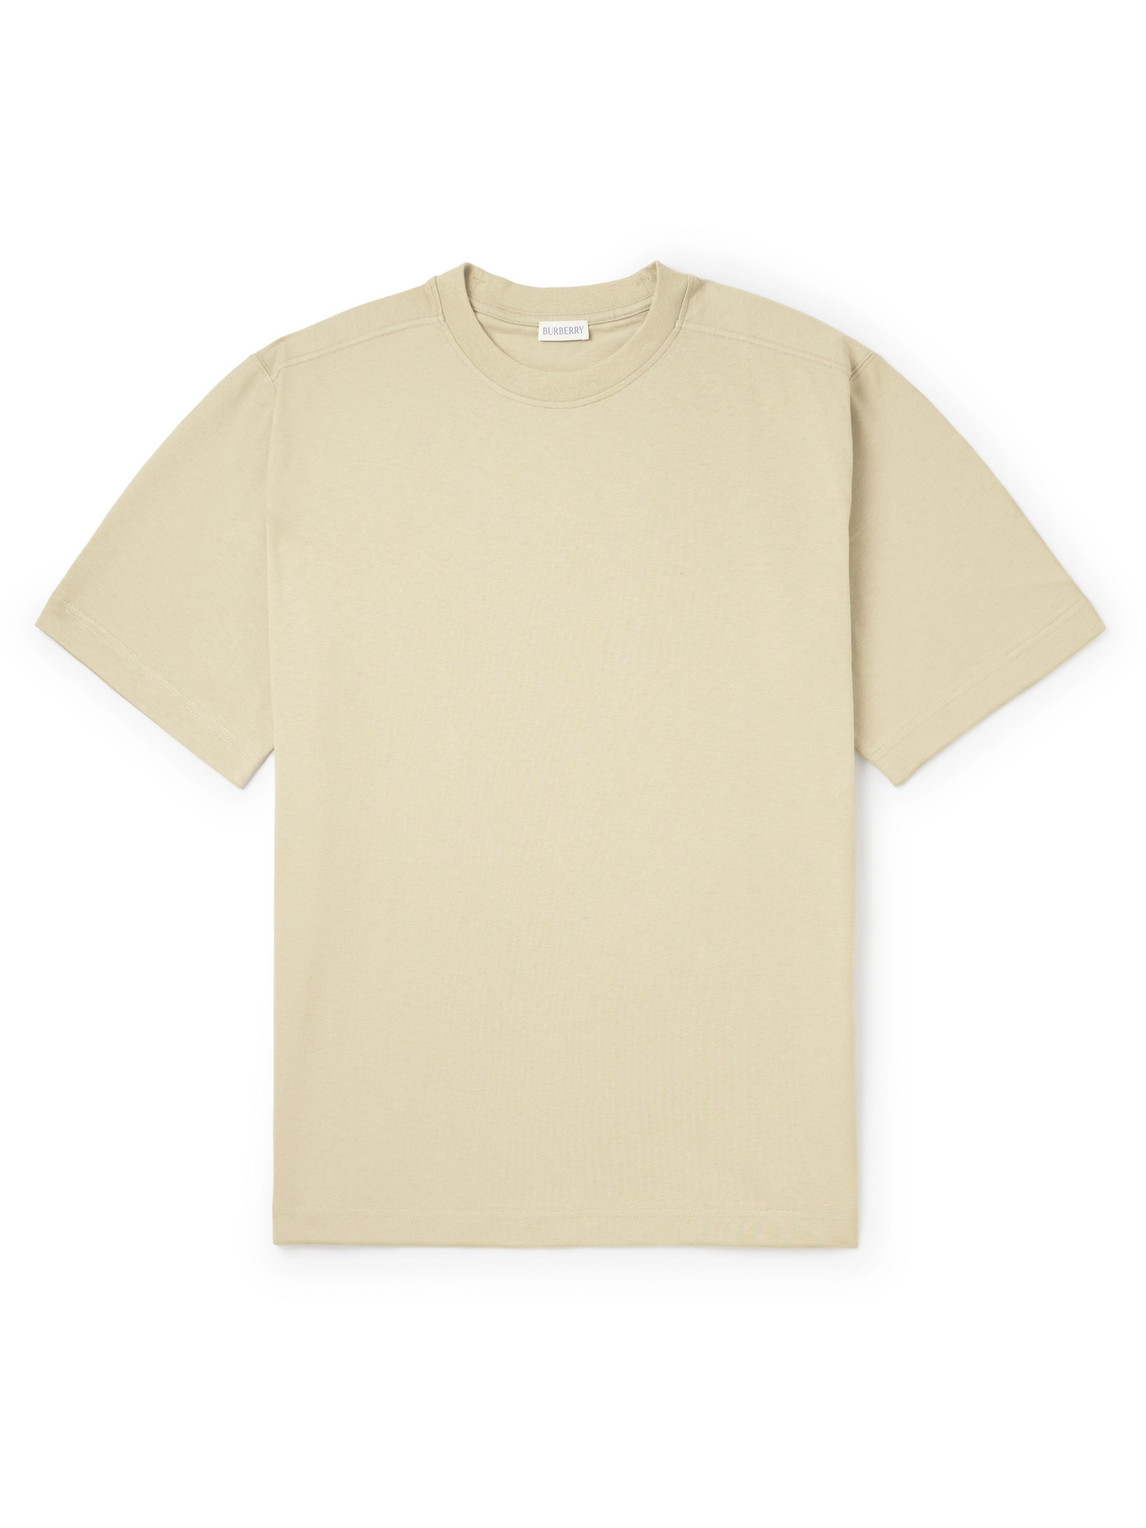 Burberry - Logo-Embroidered Cotton-Jersey T-Shirt - Men - Neutrals - L von Burberry